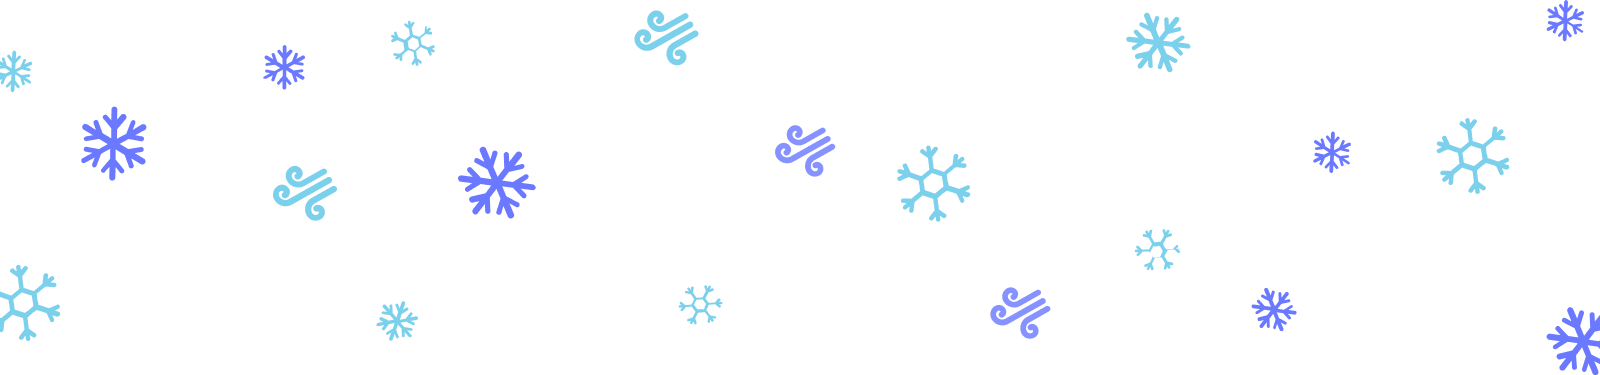 Snowflake divider image